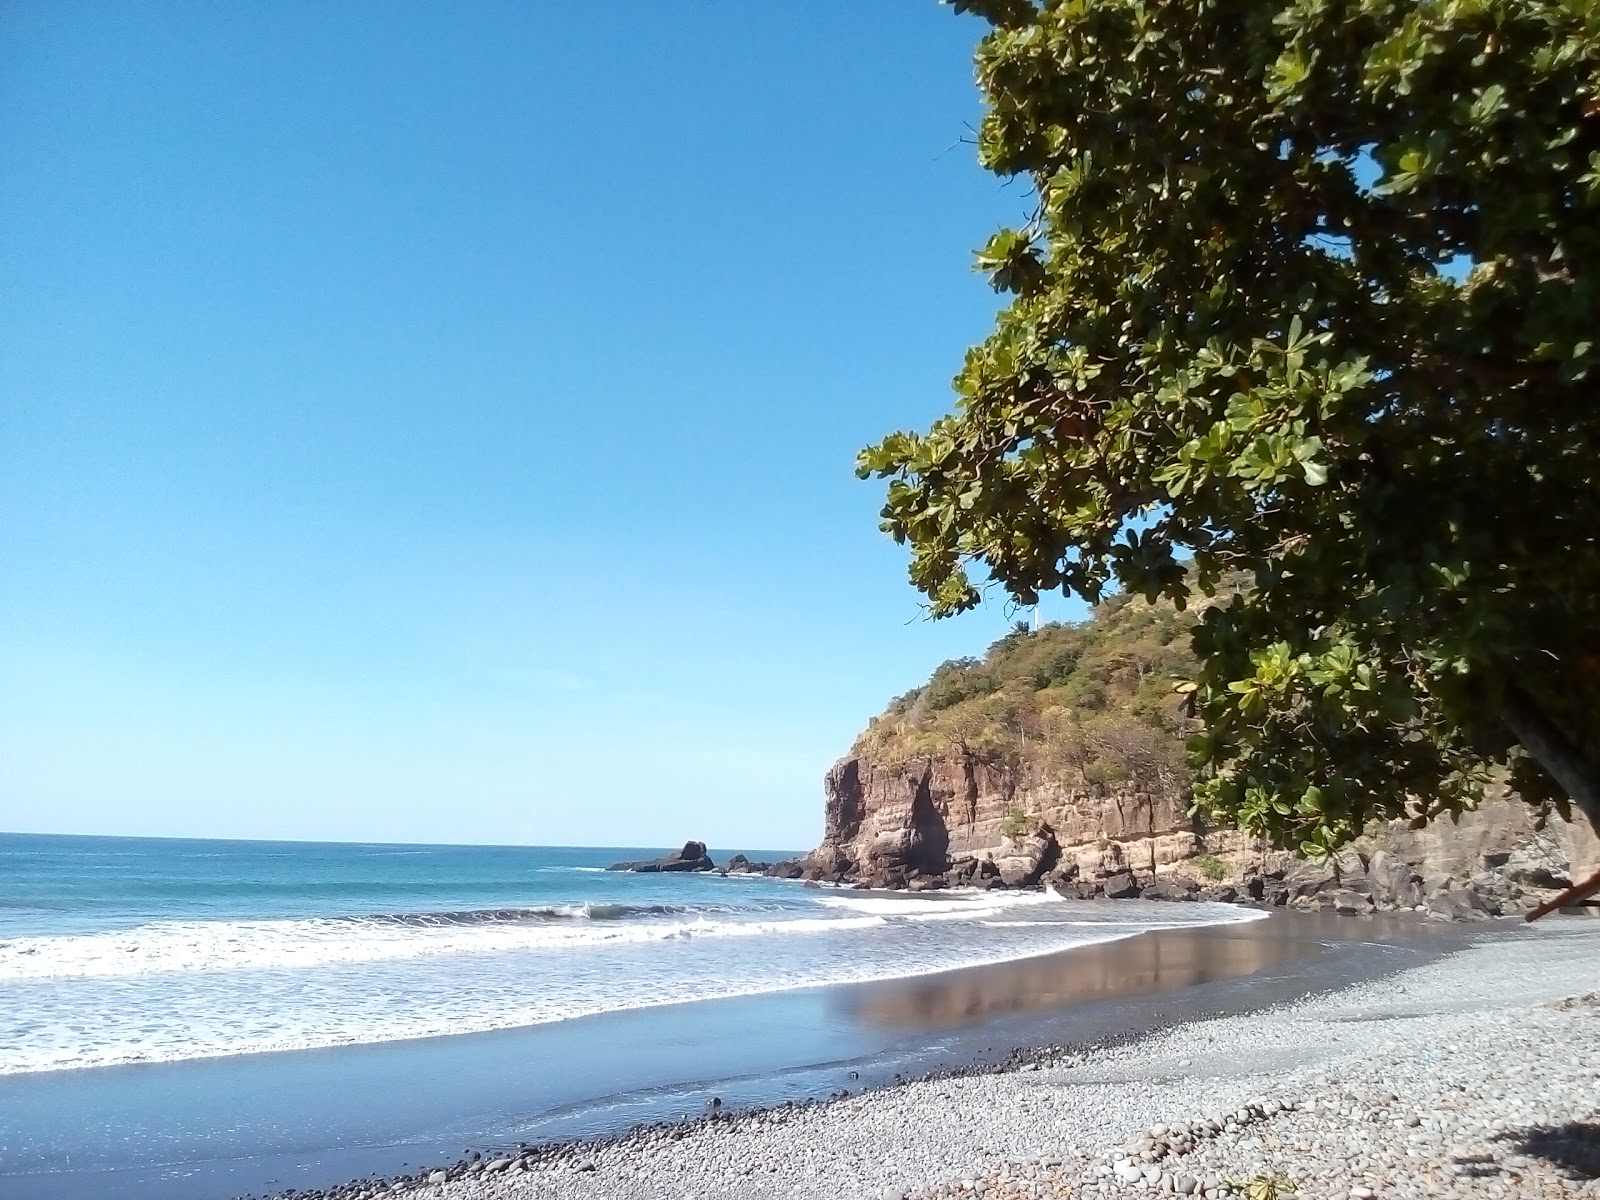 Photo of La Perla beach with spacious shore